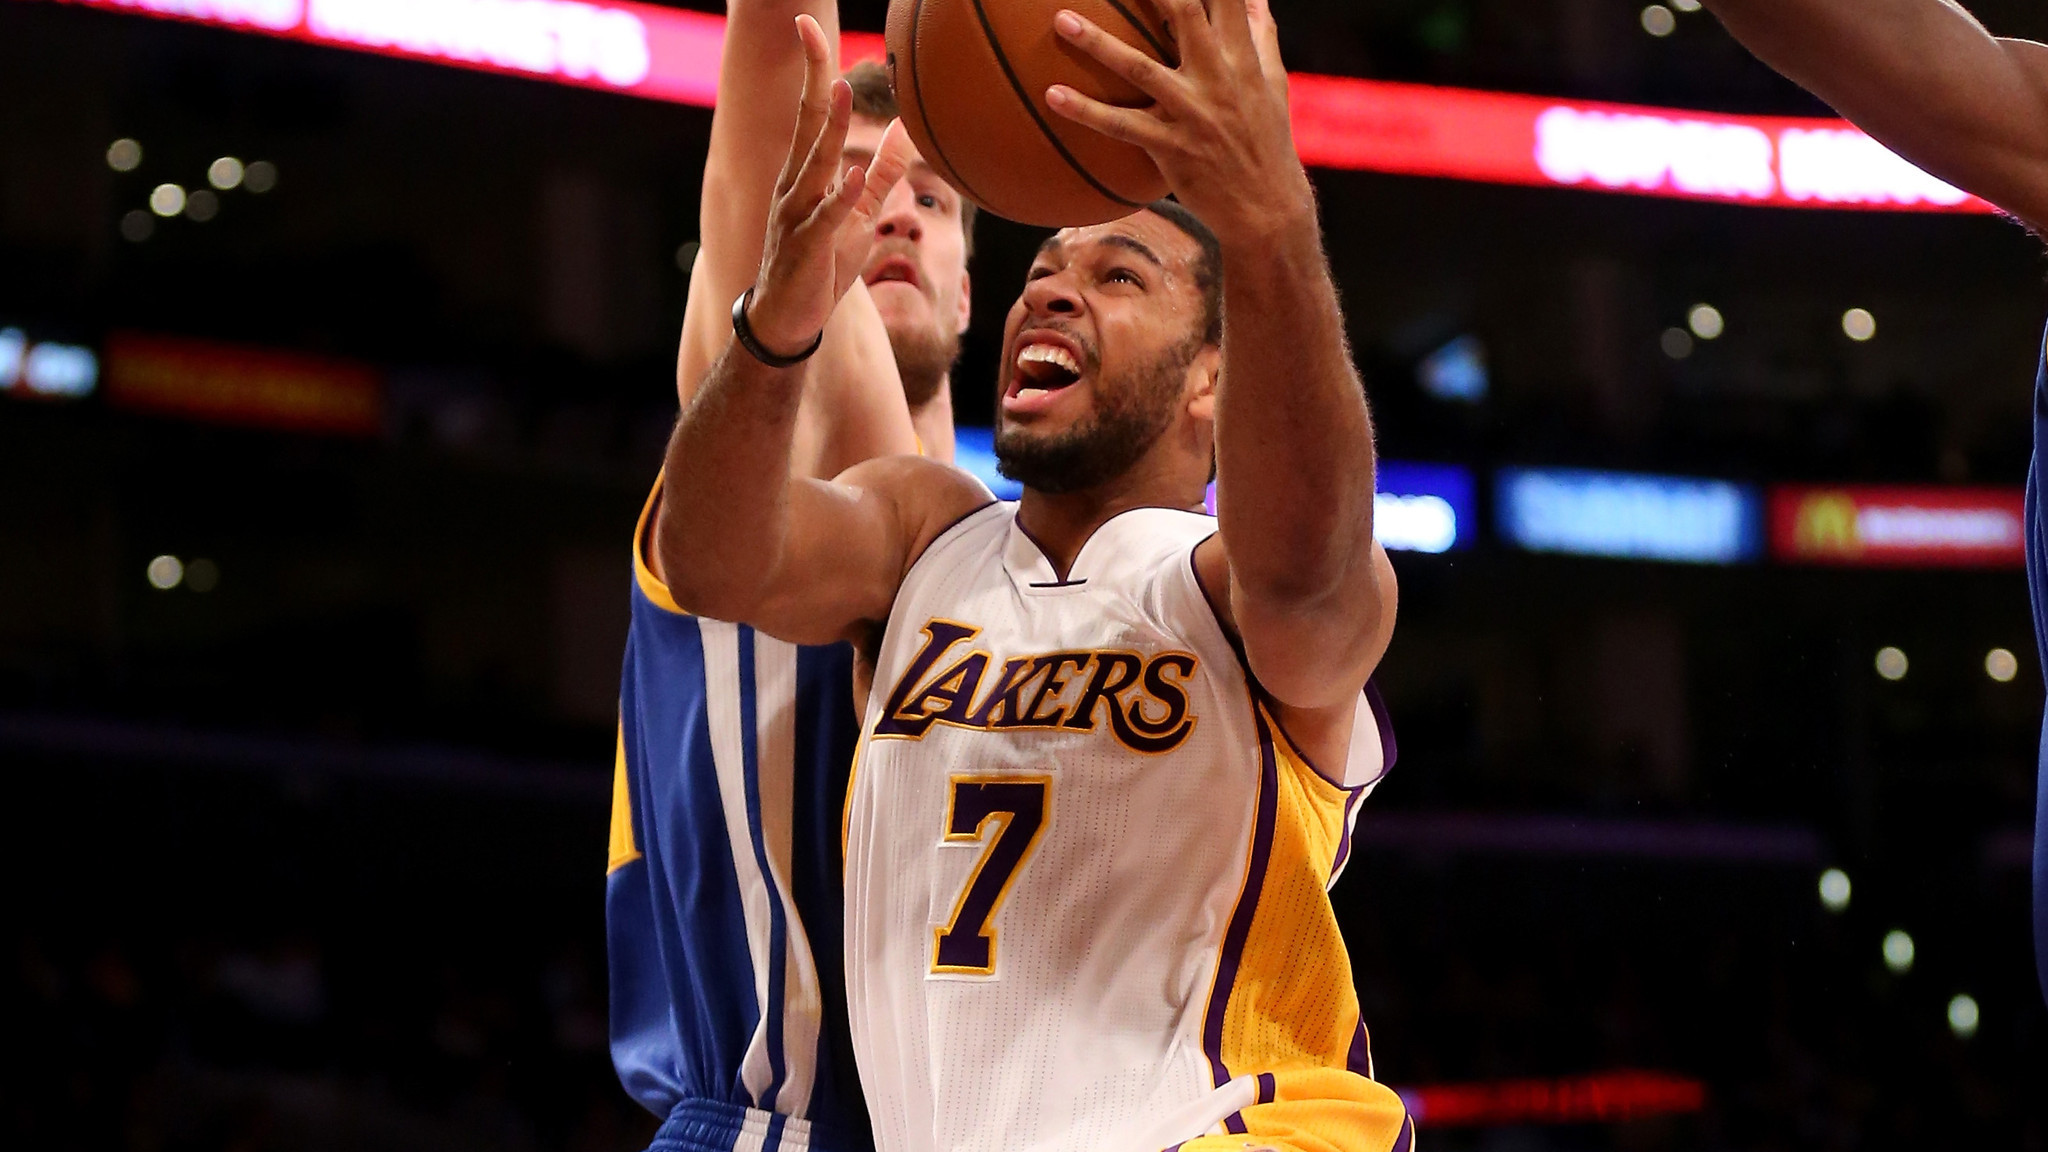 Lakers' Xavier Henry tears Achilles' tendon in practice - LA Times